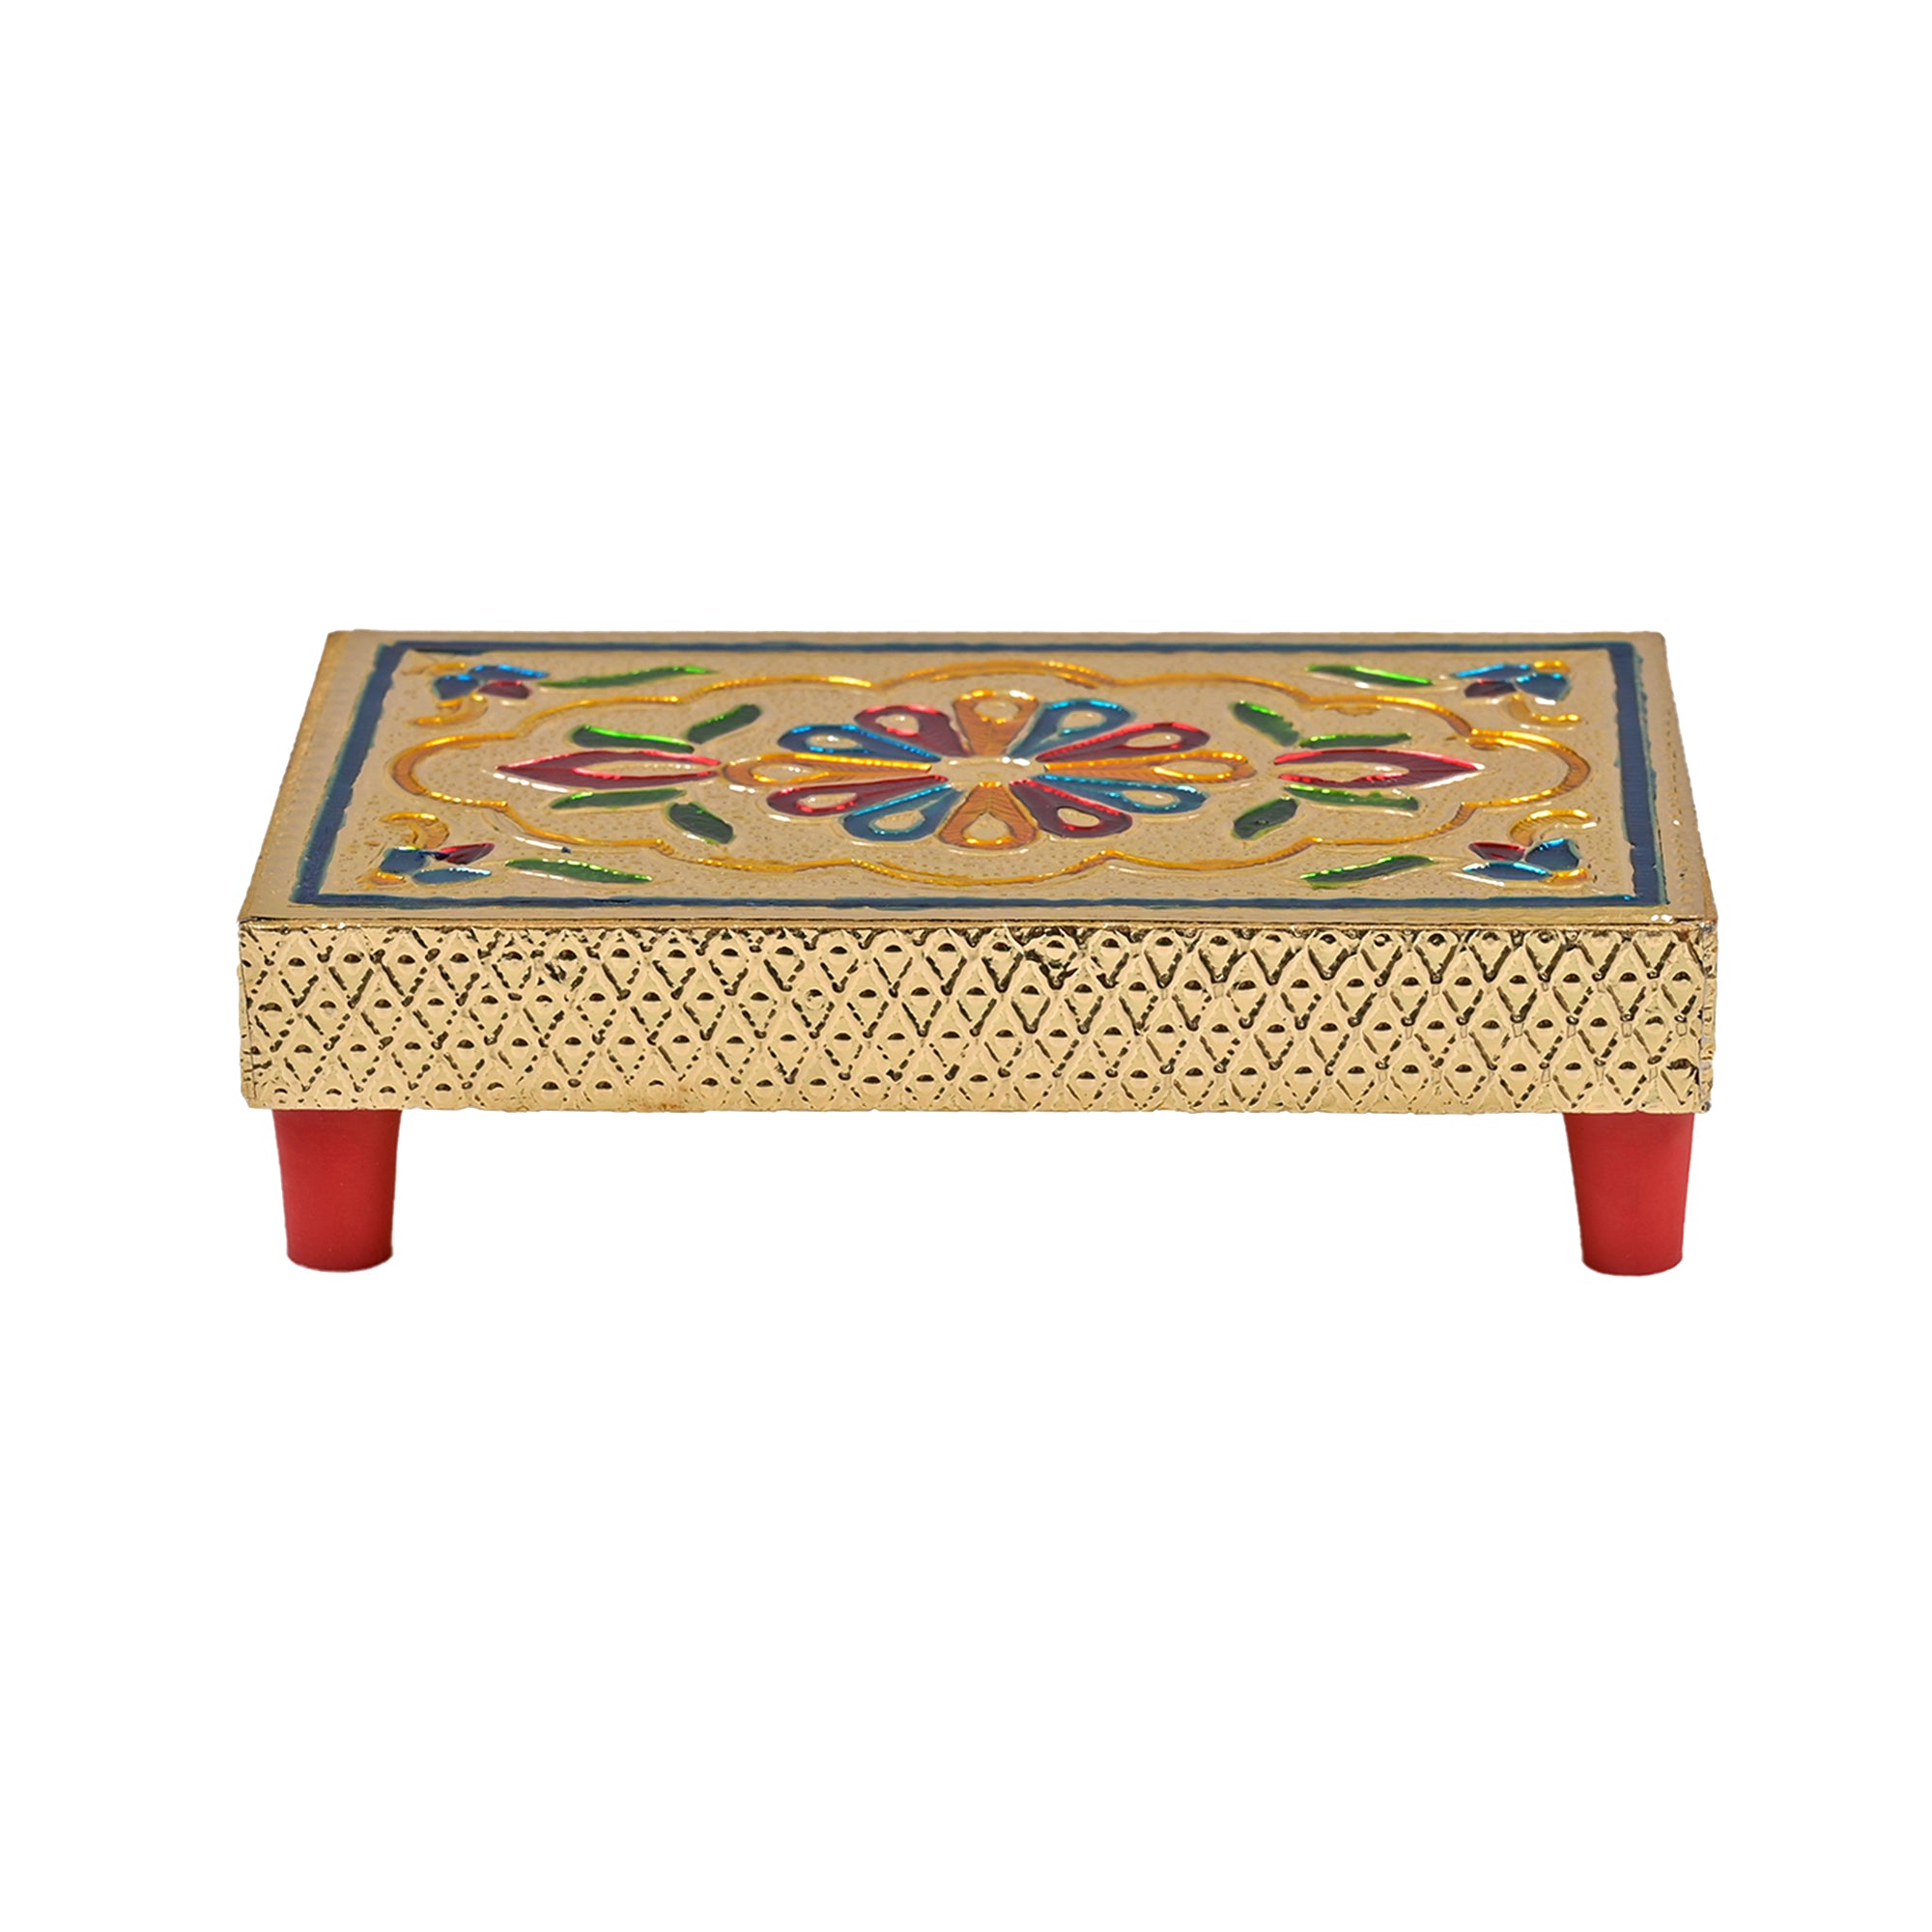 Rectangular Golden Meenakari Artwork Decorative Wooden Bajot